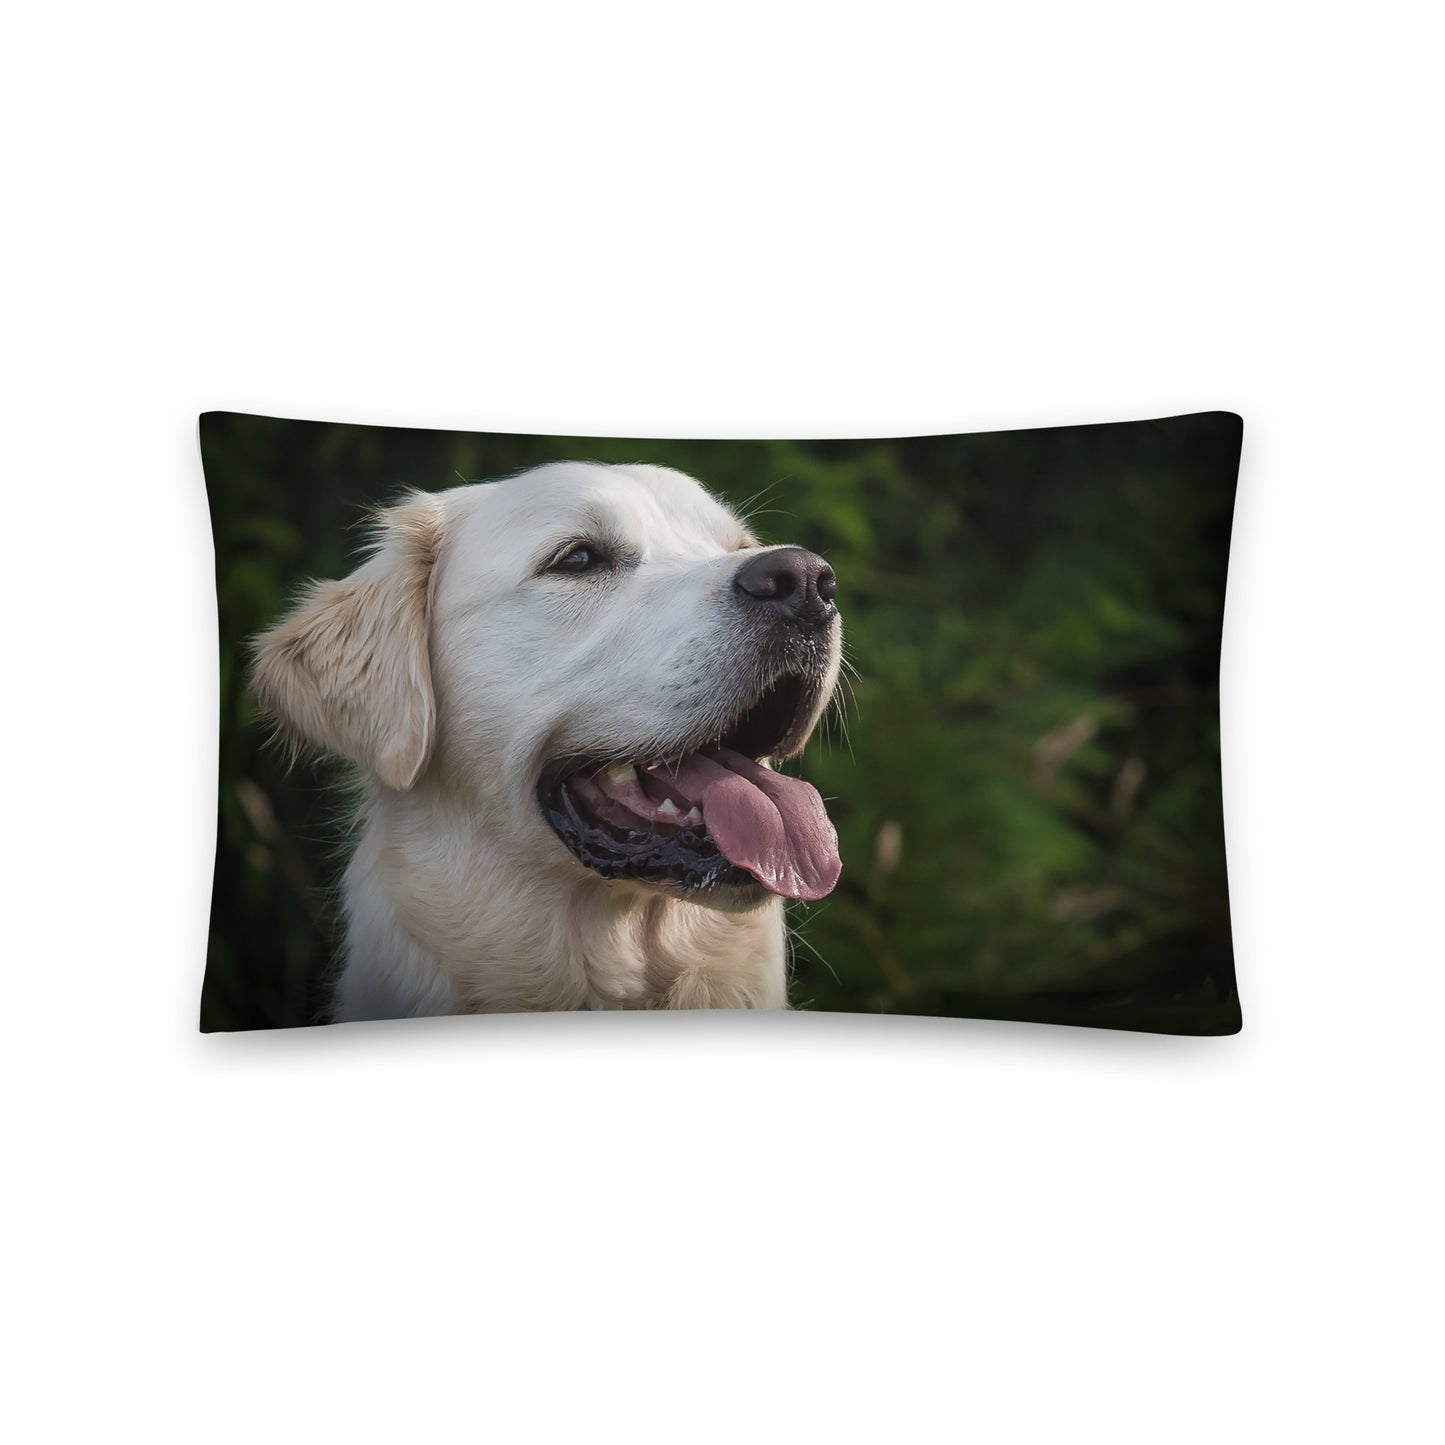 A Soft Throw Pillow Printed with a Labrador